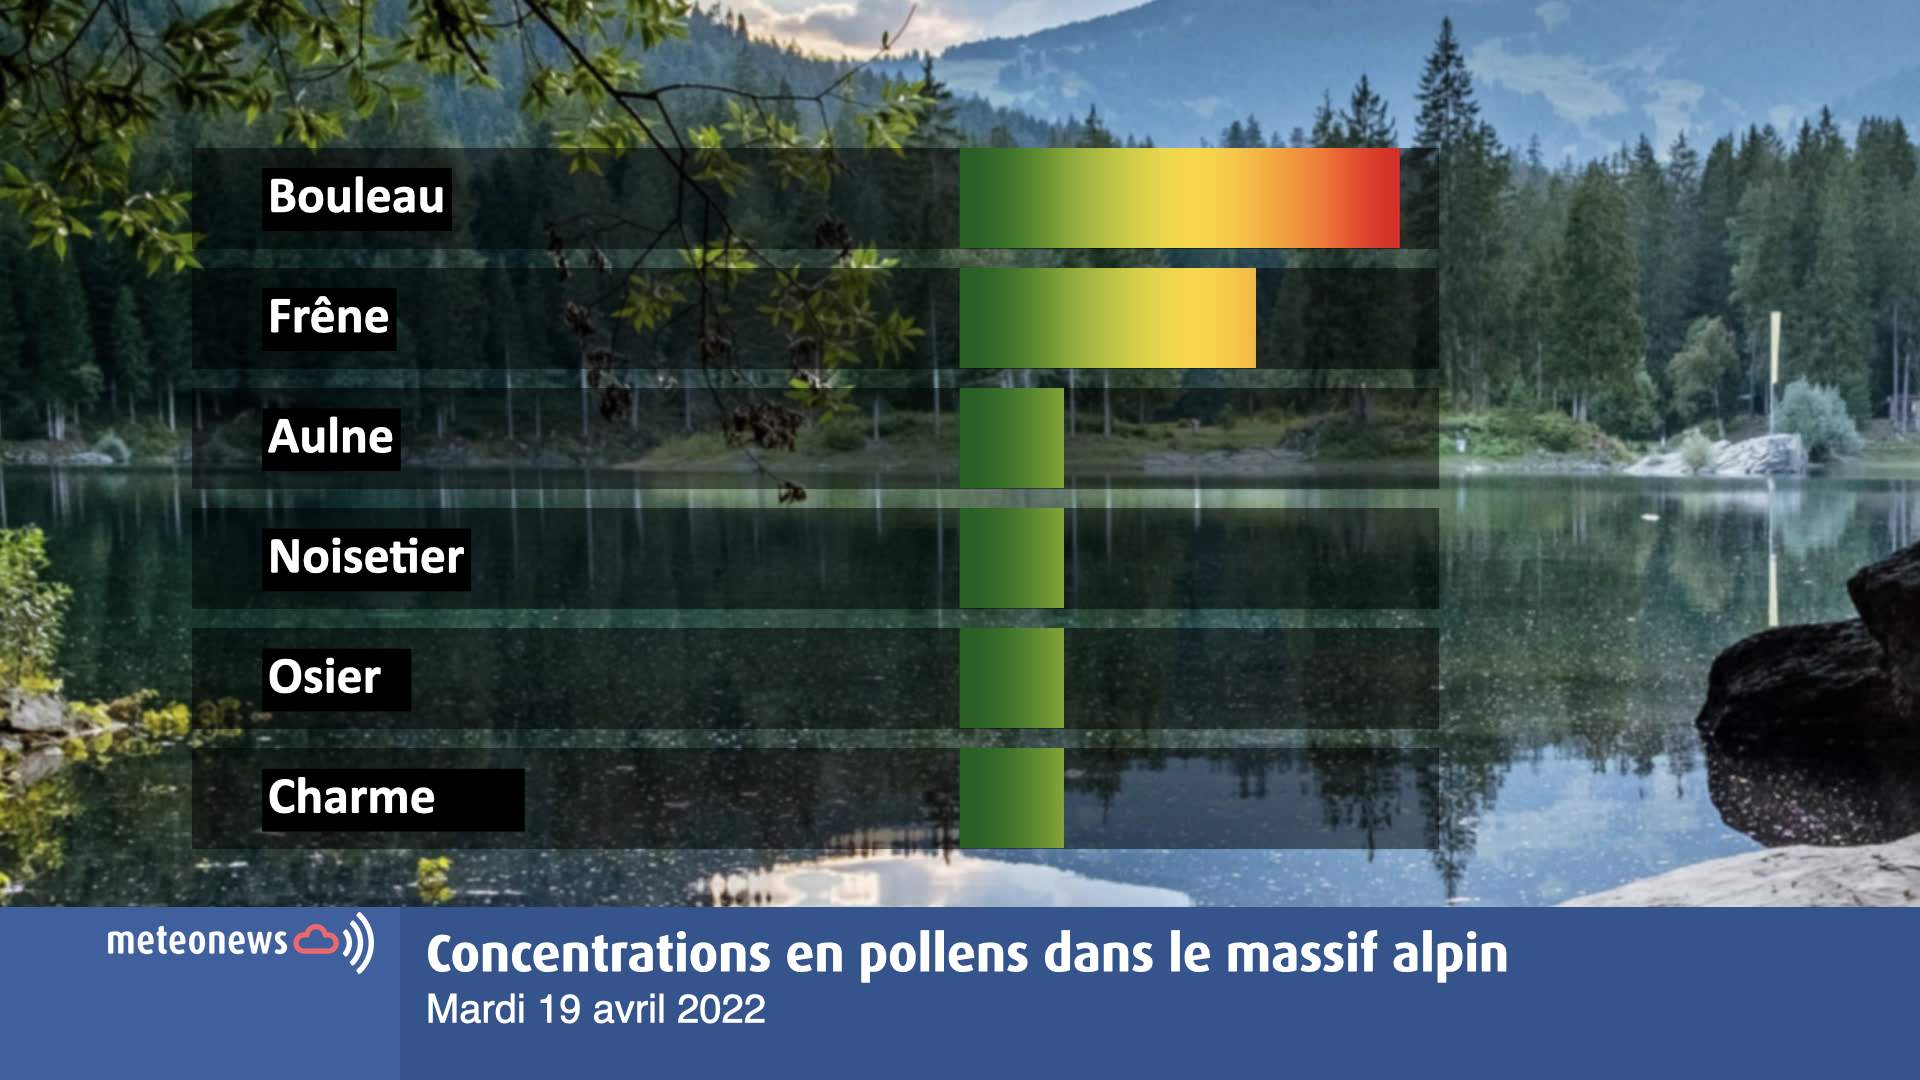 Fig. 3: Concentrations actuelles en pollens dans le massif alpin